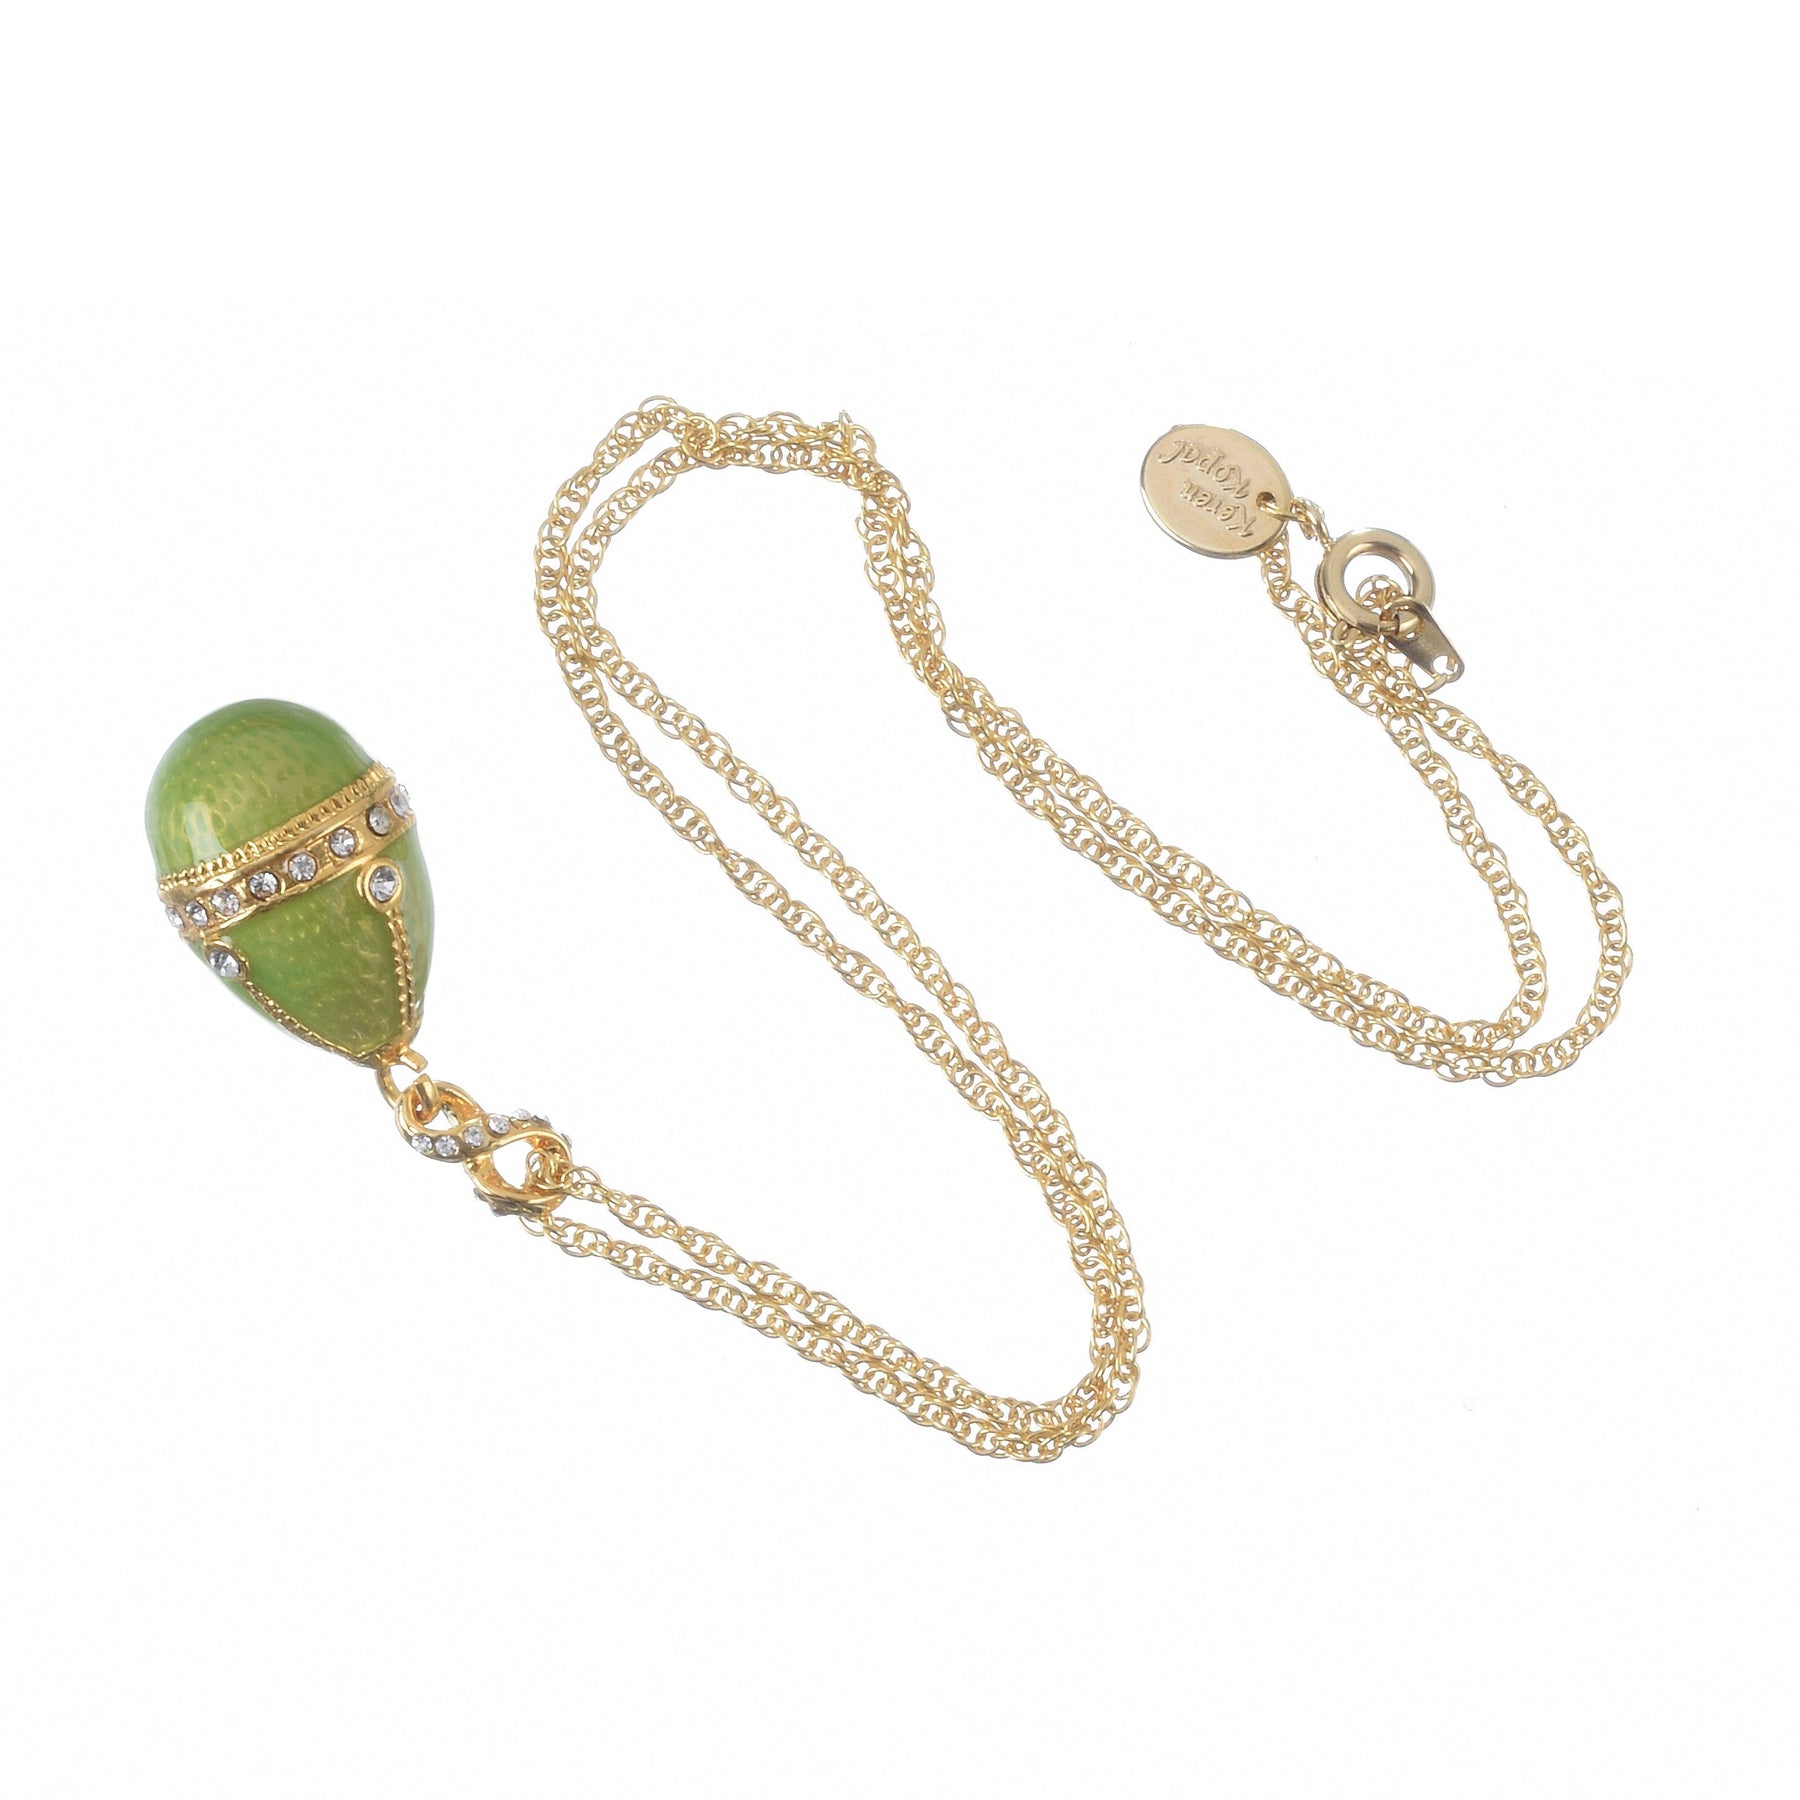 Green Egg Pendant Gold Necklace jewelry Keren Kopal